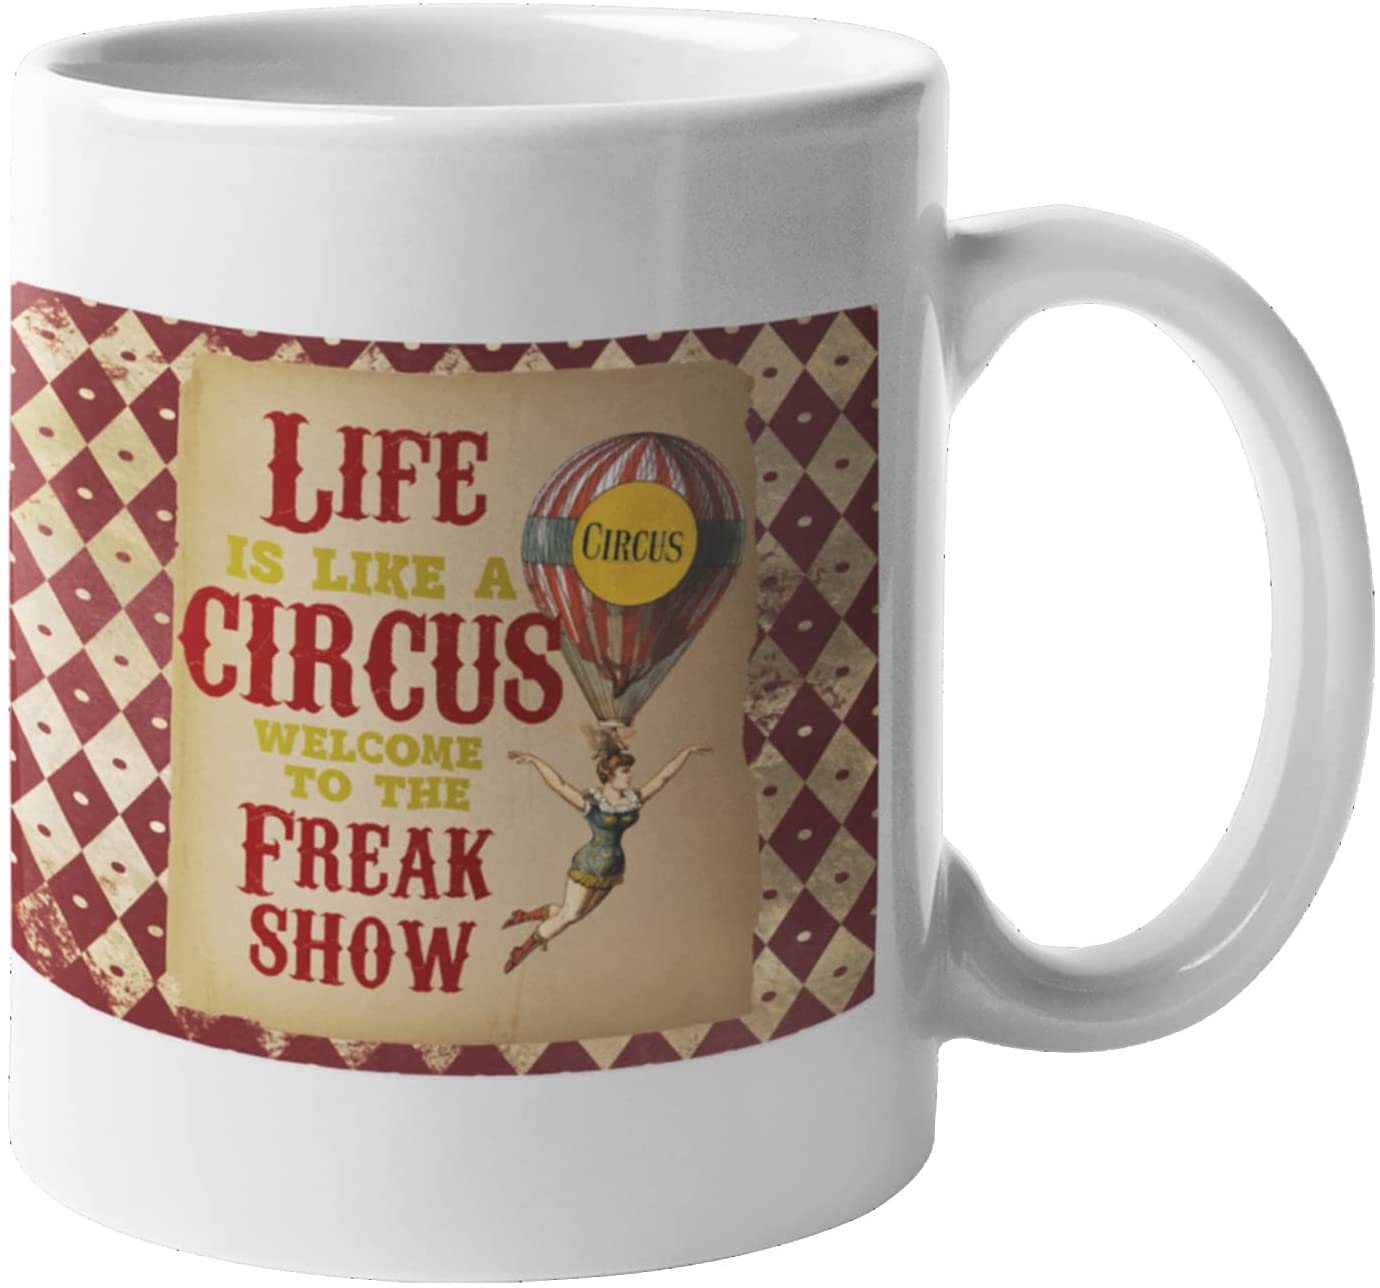 Welcome To The Freak Show Coffee Mug - Funny and Giftable 11oz Ceramic Mug